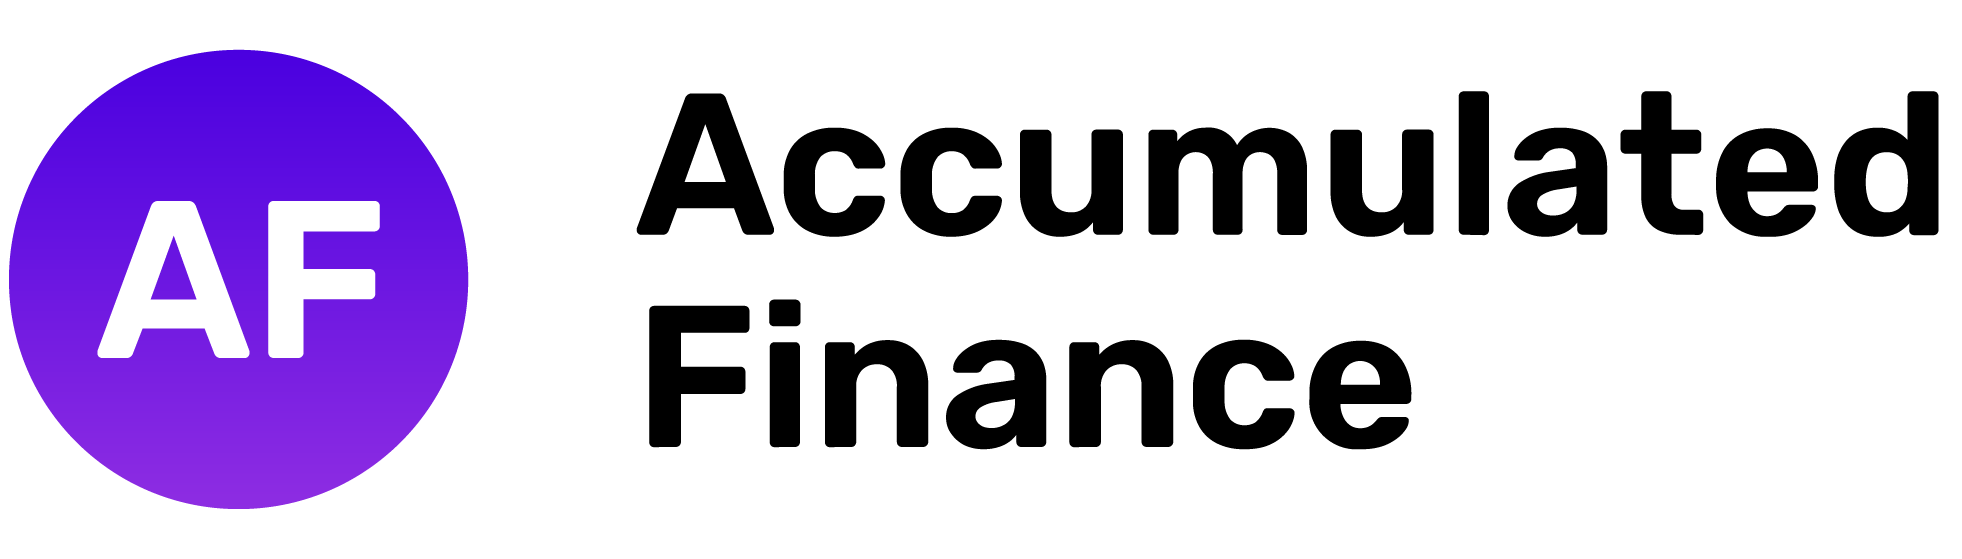 Accumulated Finance